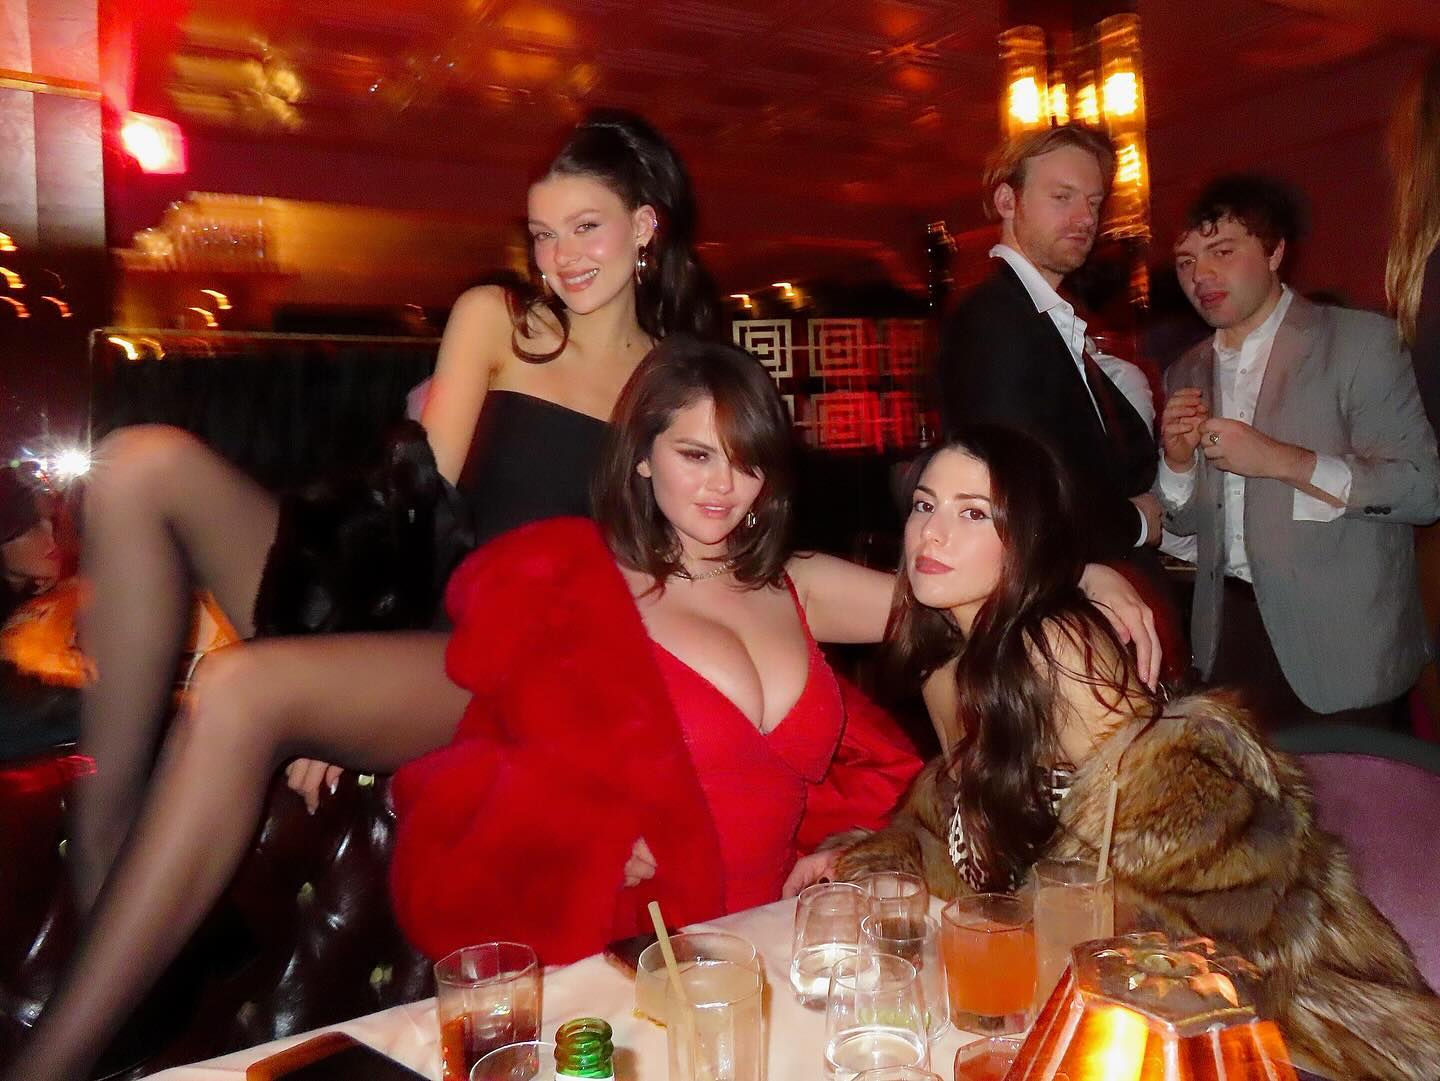 Selena Gomez Celebrates in a Red Dress! - Photo 9